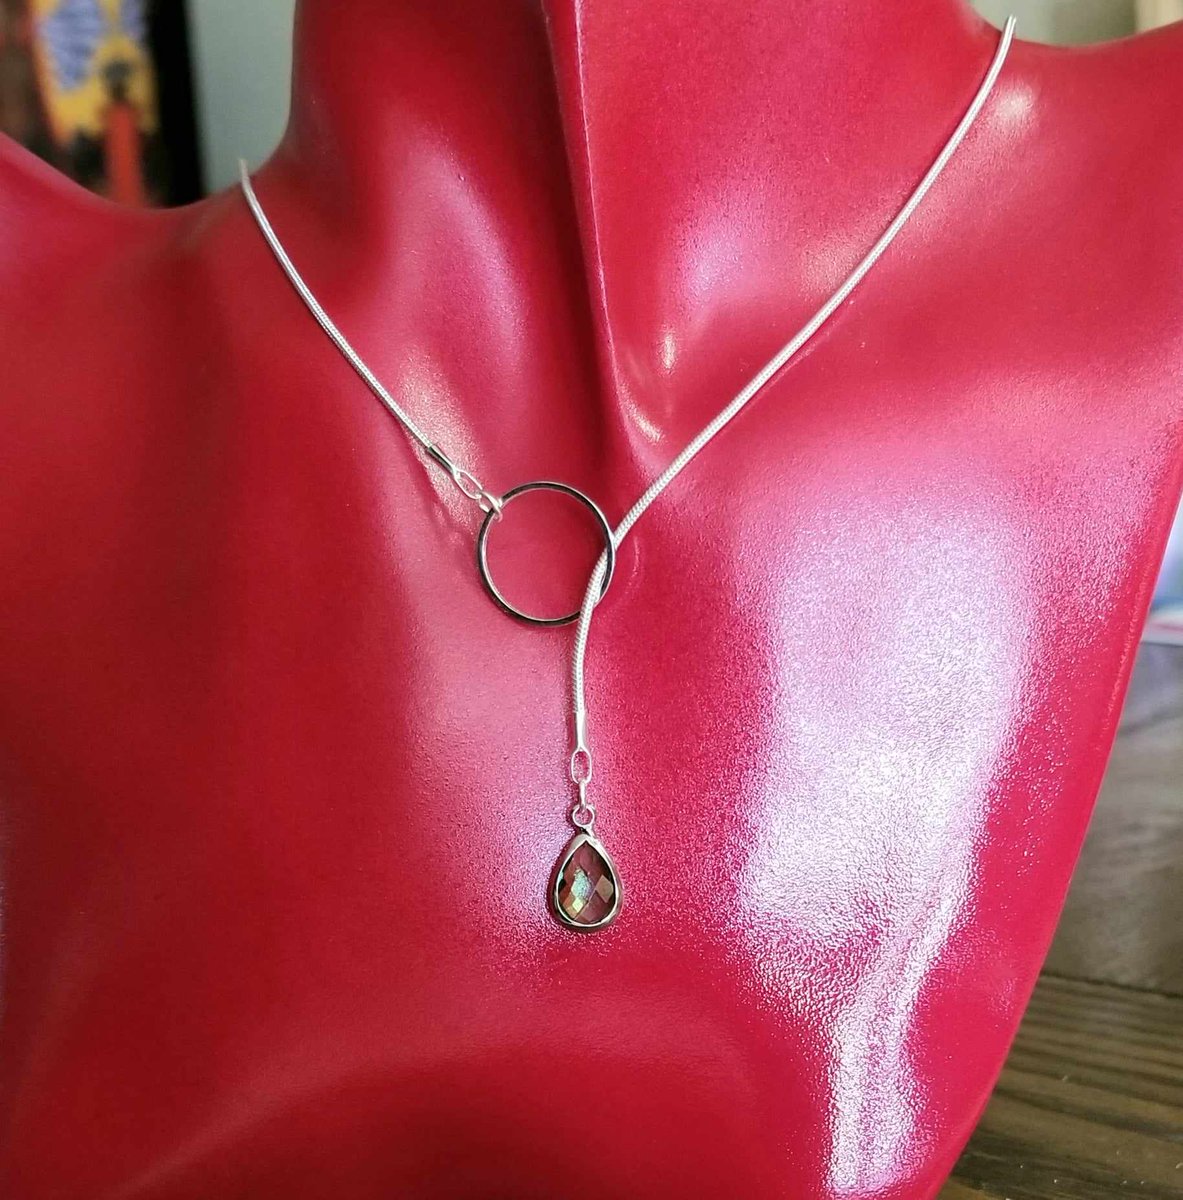 Peridot Lariat Necklace, Sterling Silver Peridot Necklace #jewelry #necklaces #lariat #lariatnecklace #silvernecklace #silvernecklaces #handmadejewelry #handmade #giftsforher #Etsy #peridot #peridotjewelry #Augustbirthstone #peridotnecklace 

etsy.me/3KHgBWz via @Etsy